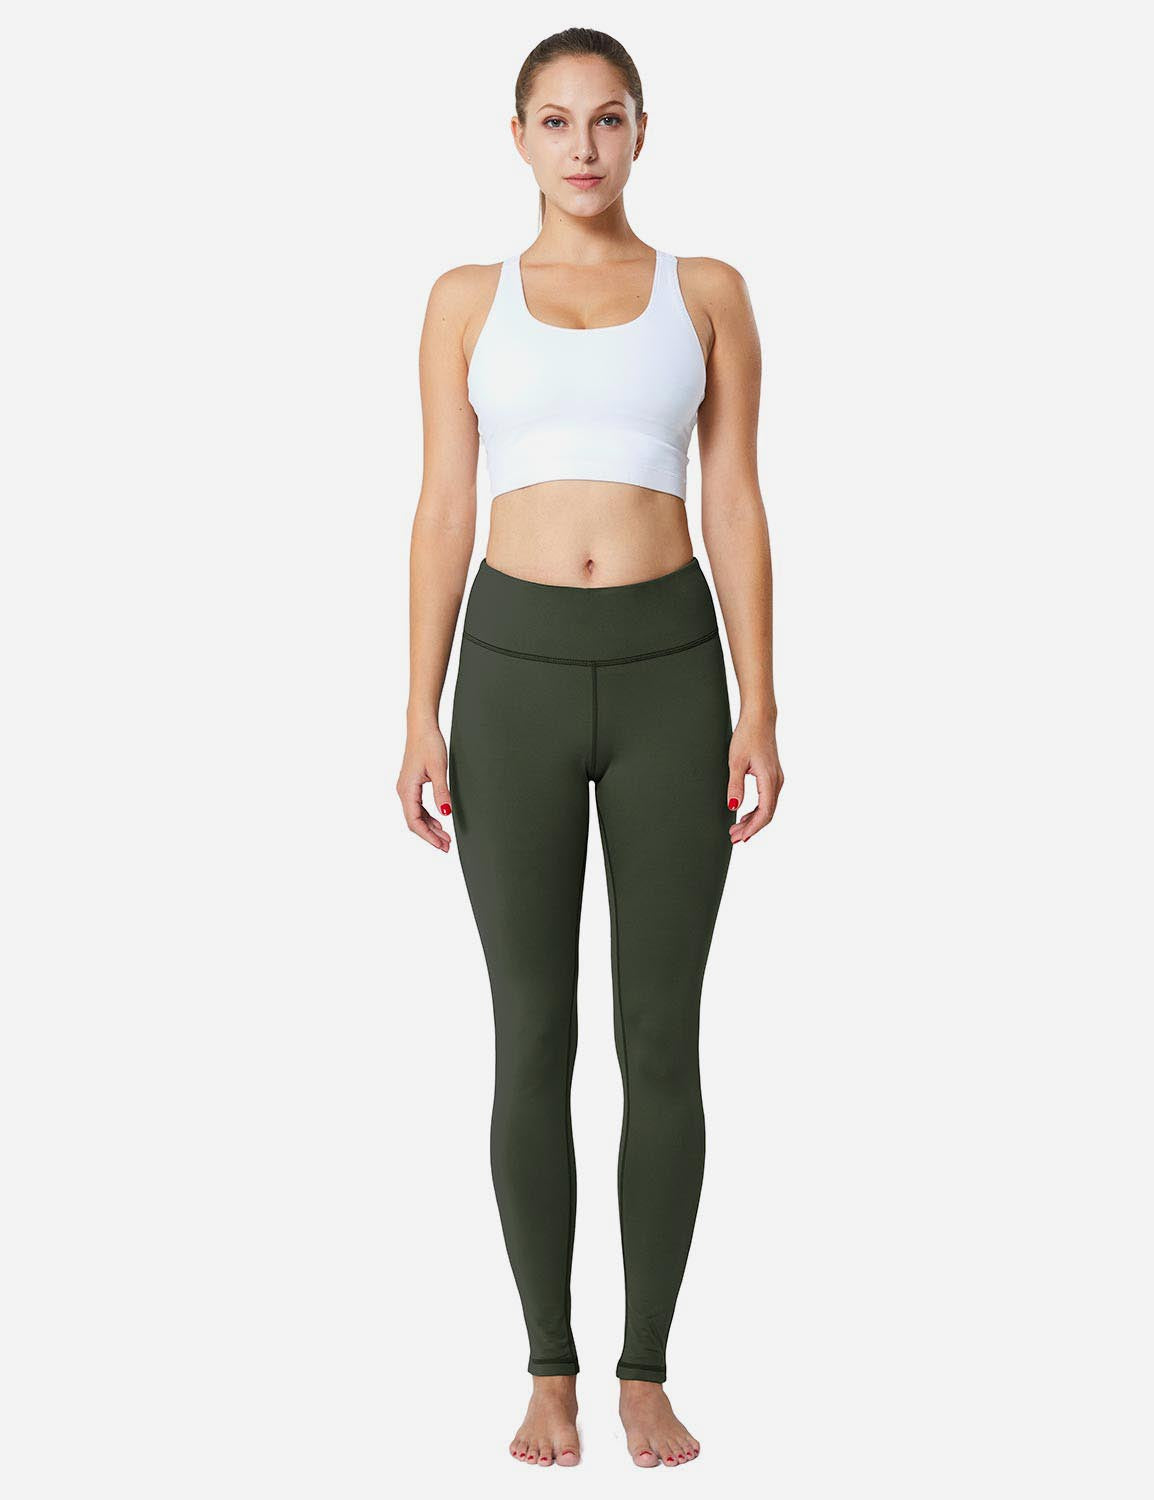 Baleaf Women's Mid-Rise Fleece Lined Basic Yoga & Workout Leggings abh018 Army-Green Full